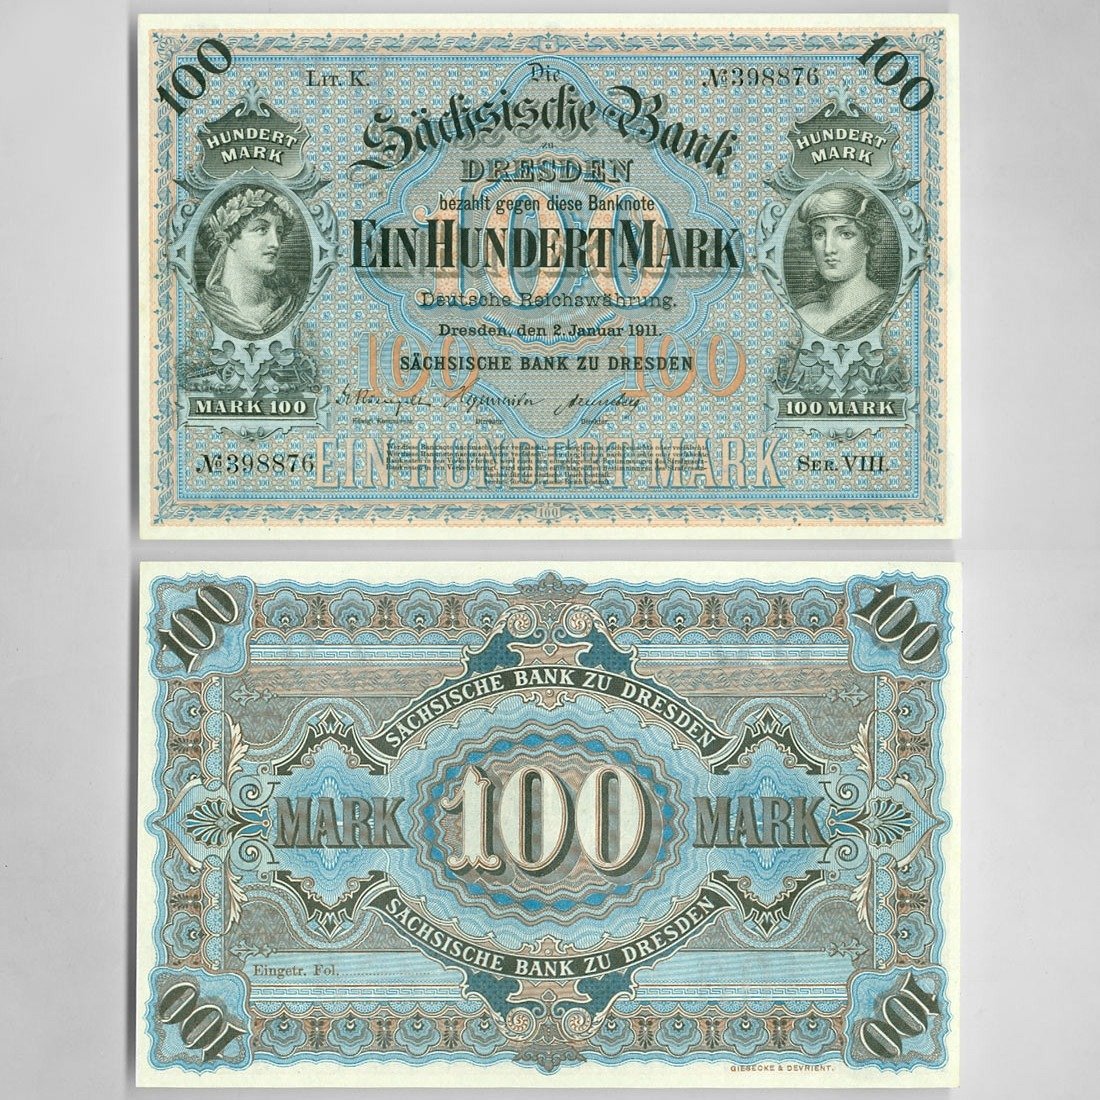 Купюра марка. 100 Марок 1911. 100 Марок ФРГ. Банкноты Германии. 100 Марок купюра.